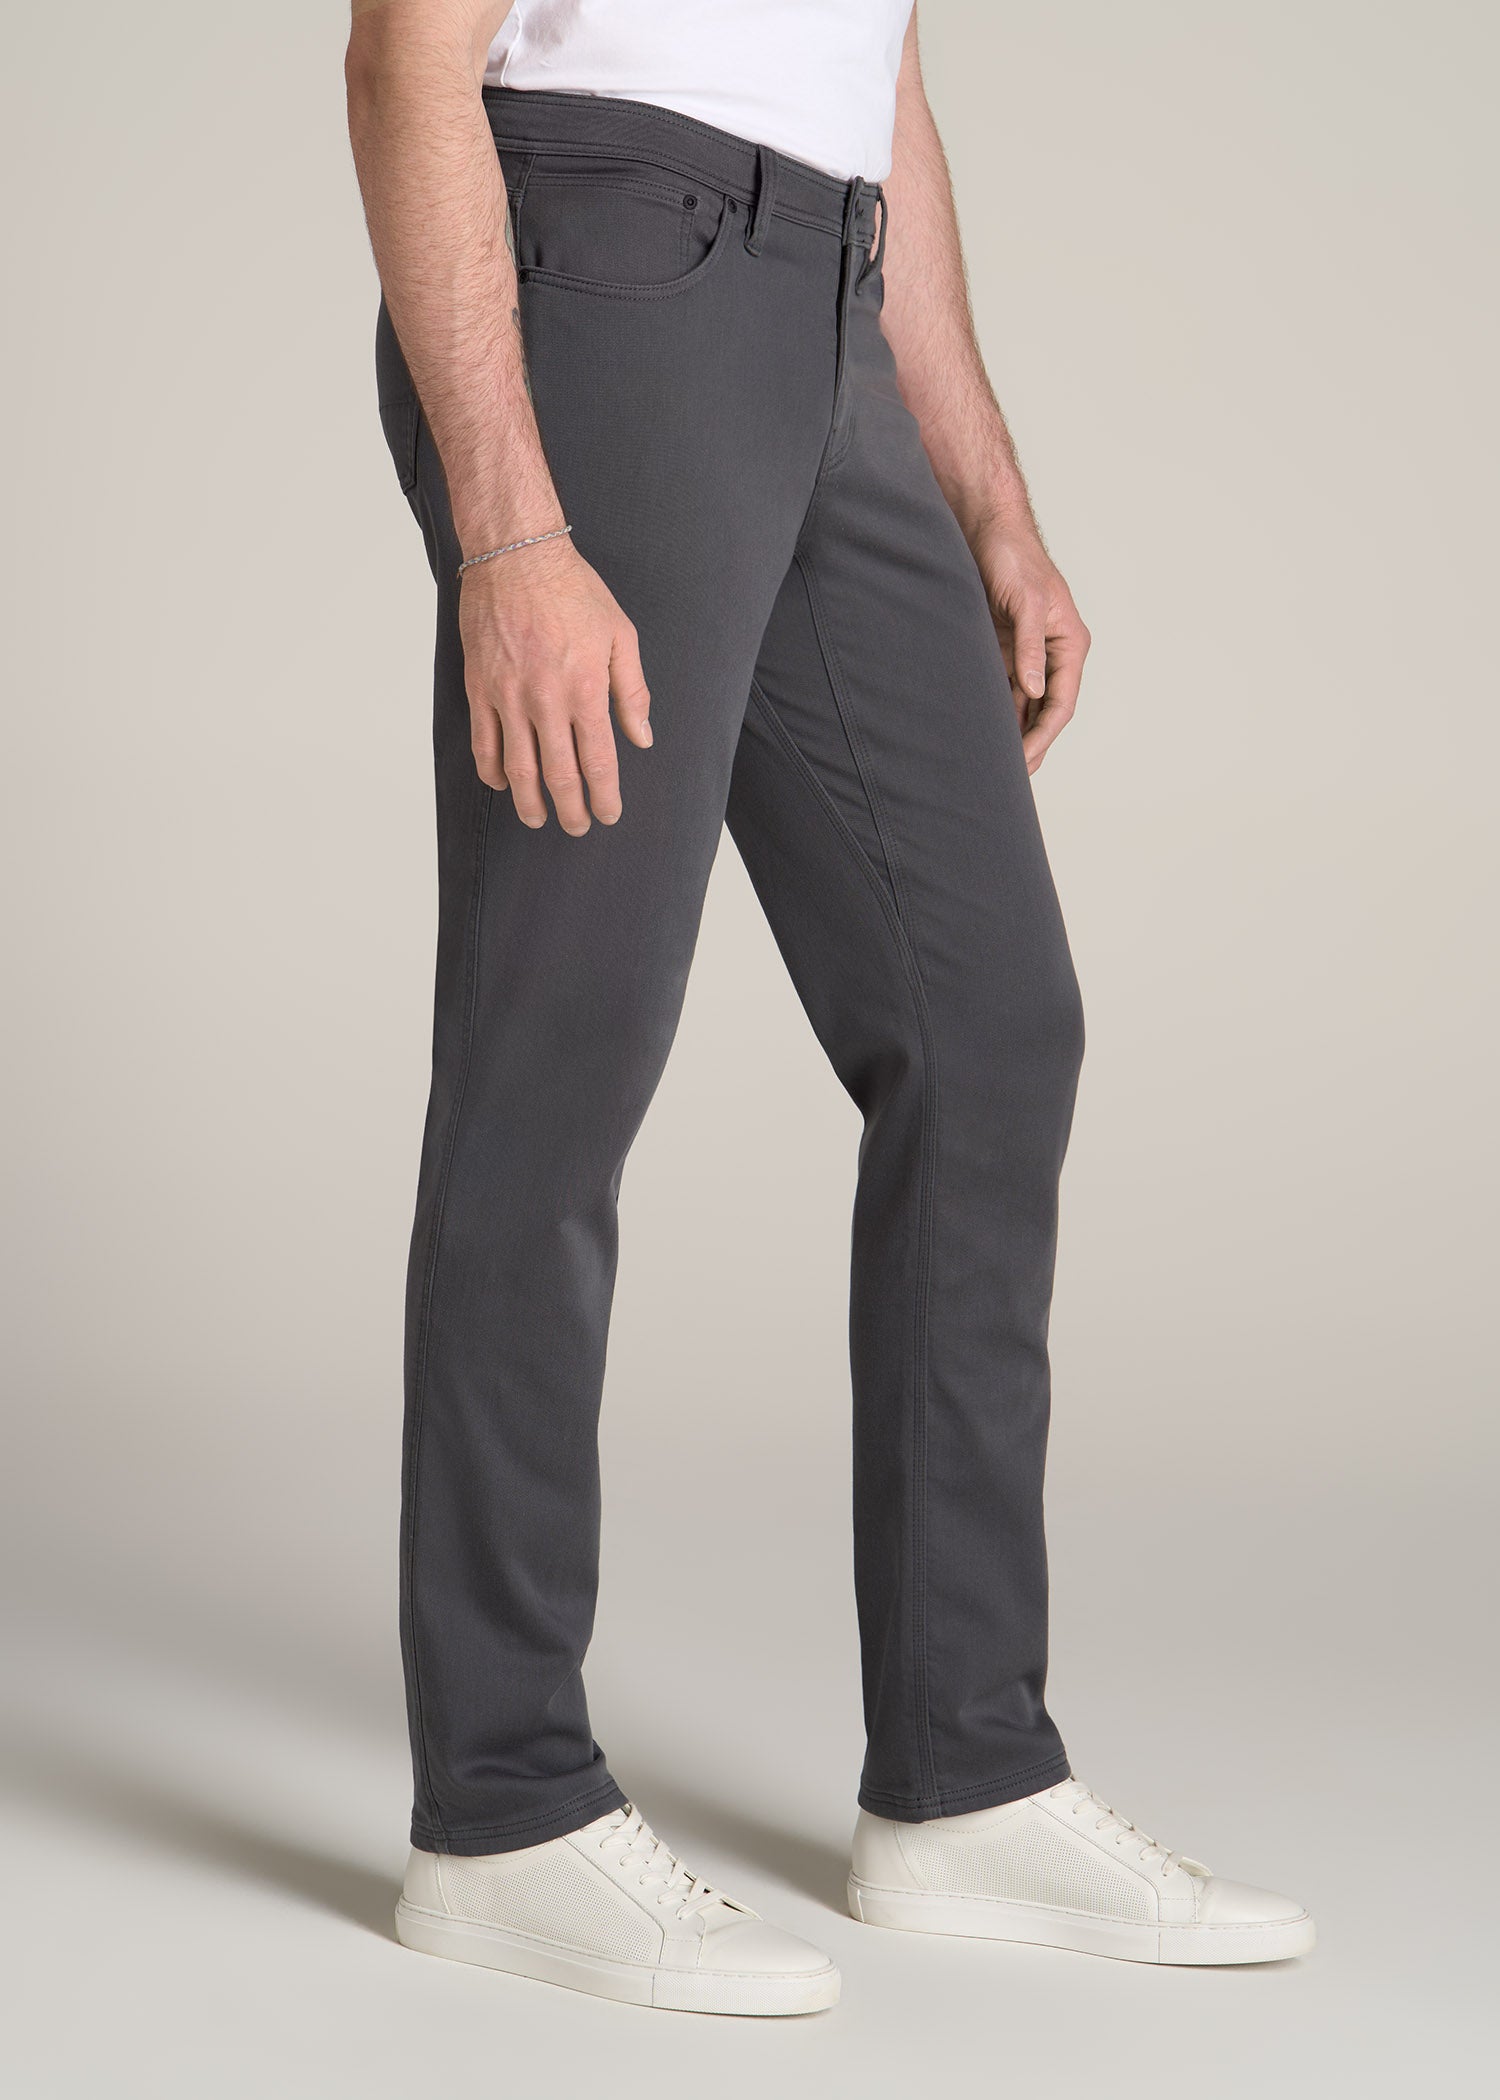 J1 Straight Leg Five-Pocket Pants For Tall Men Black